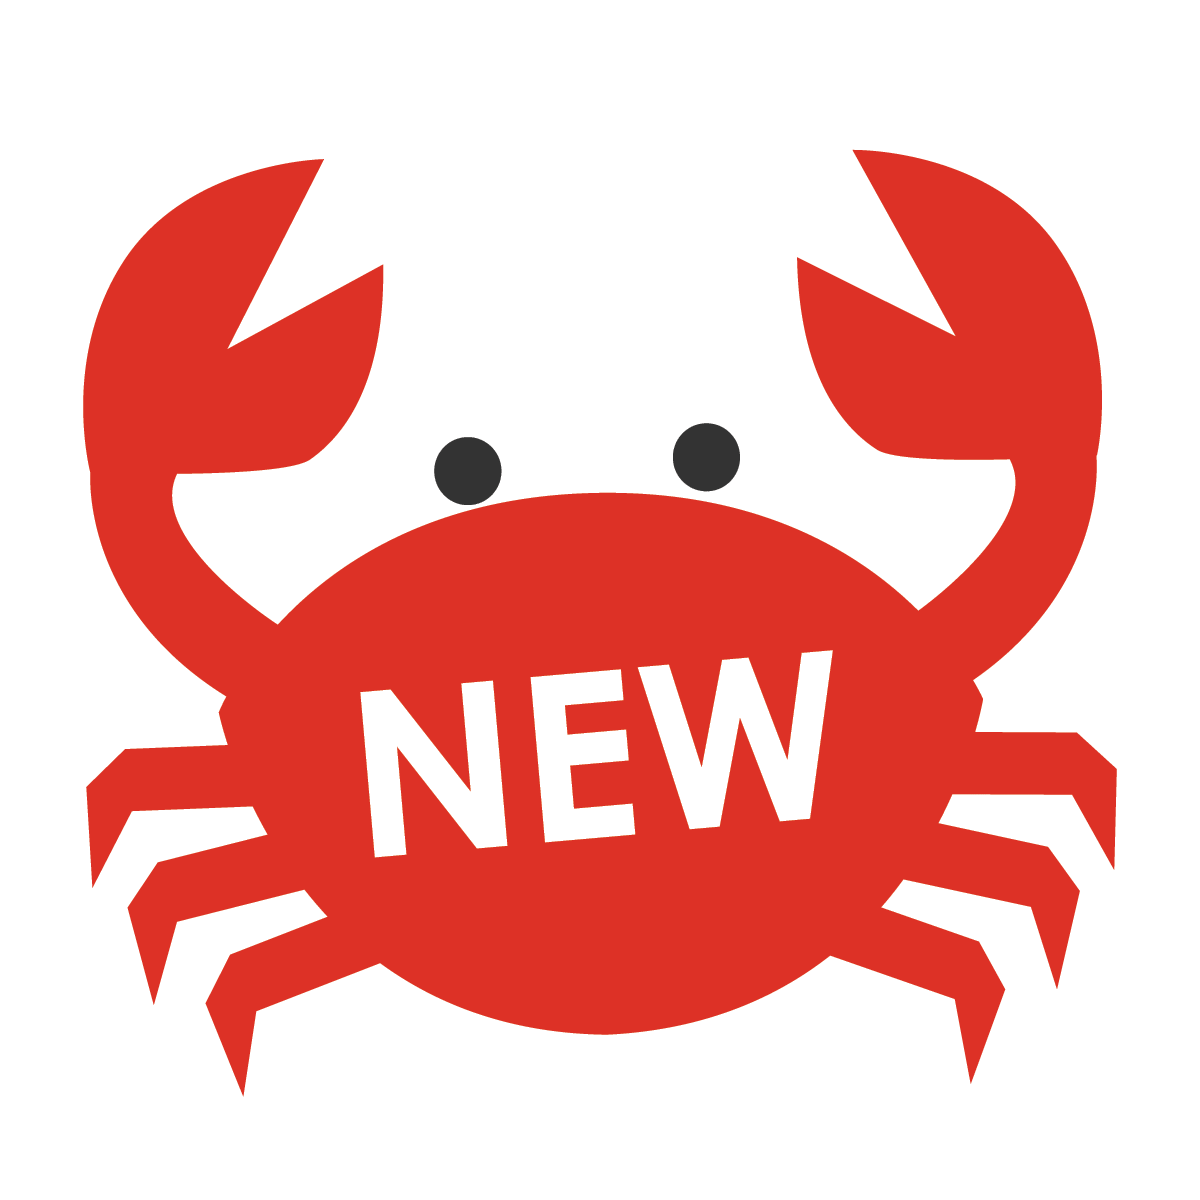 NEW Crab